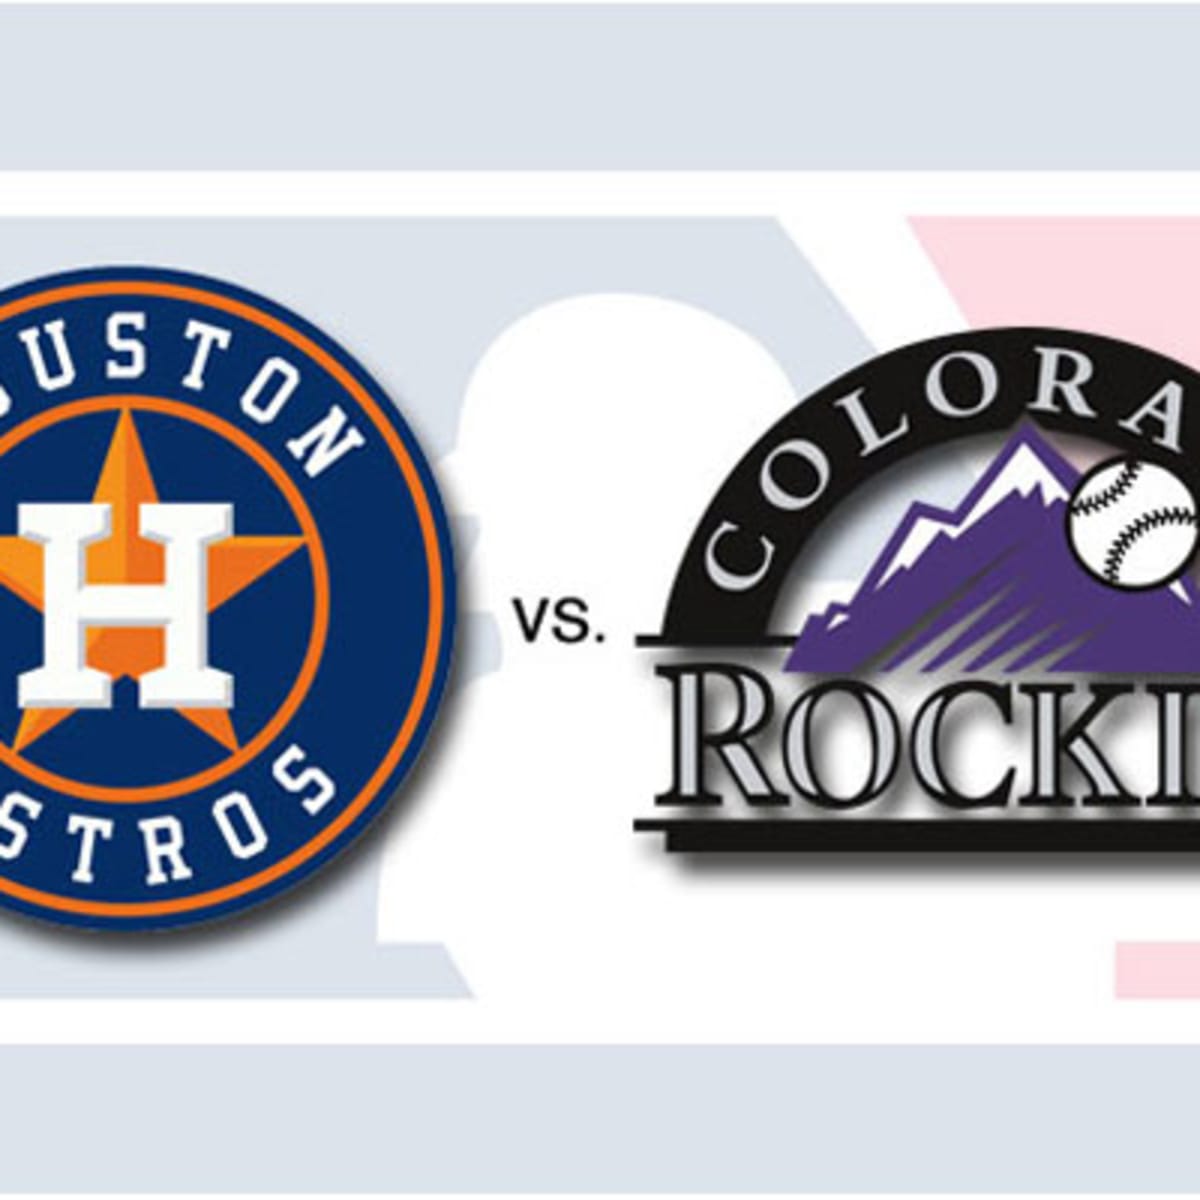 Houston Astros, LLC Trademarks & Logos